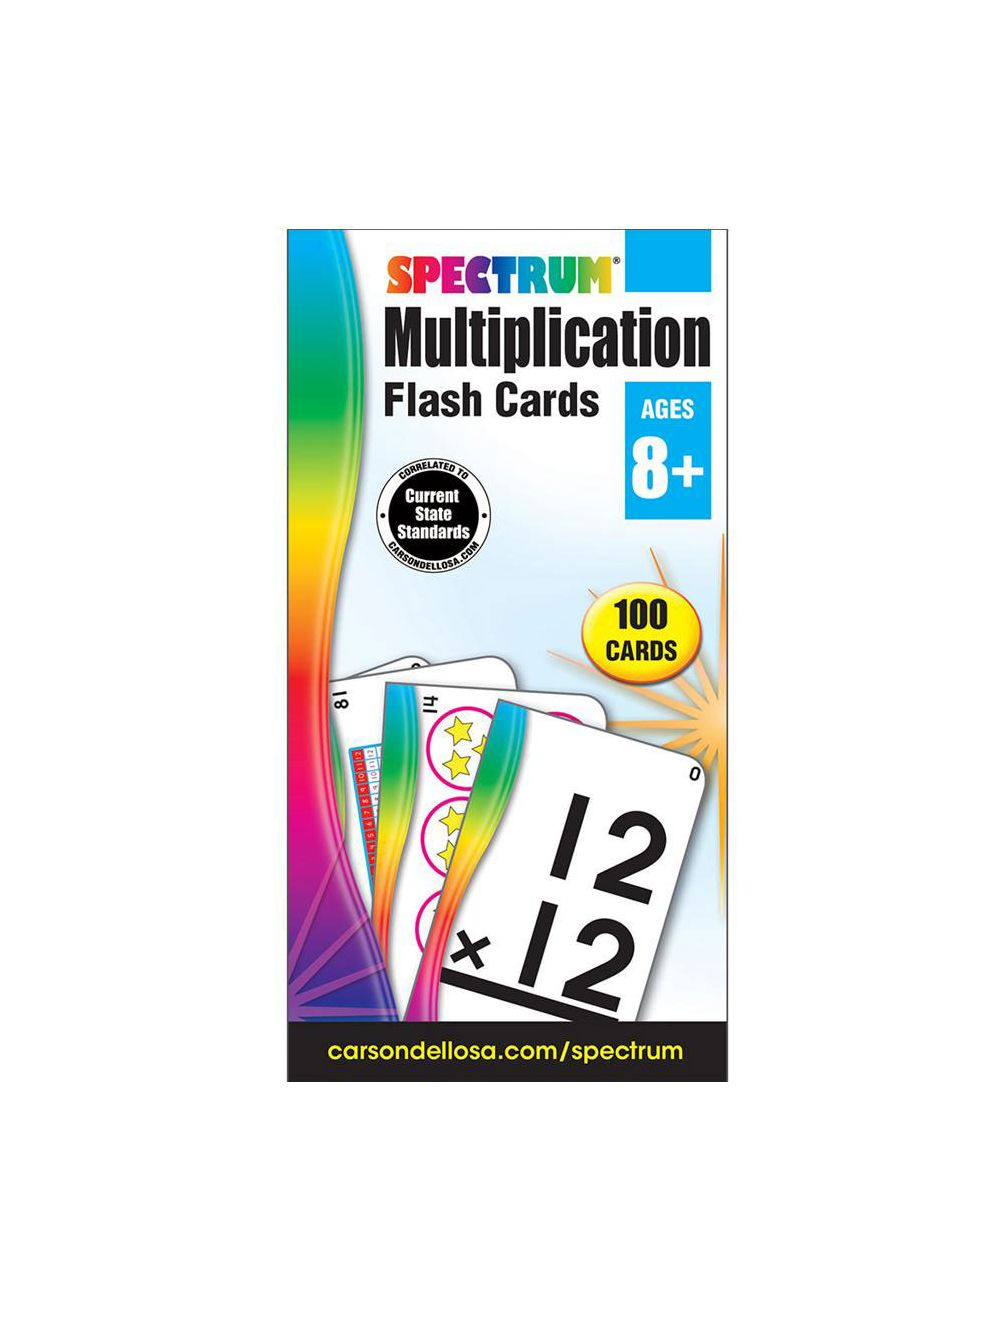 Multiplication Spectrum Flash Cards